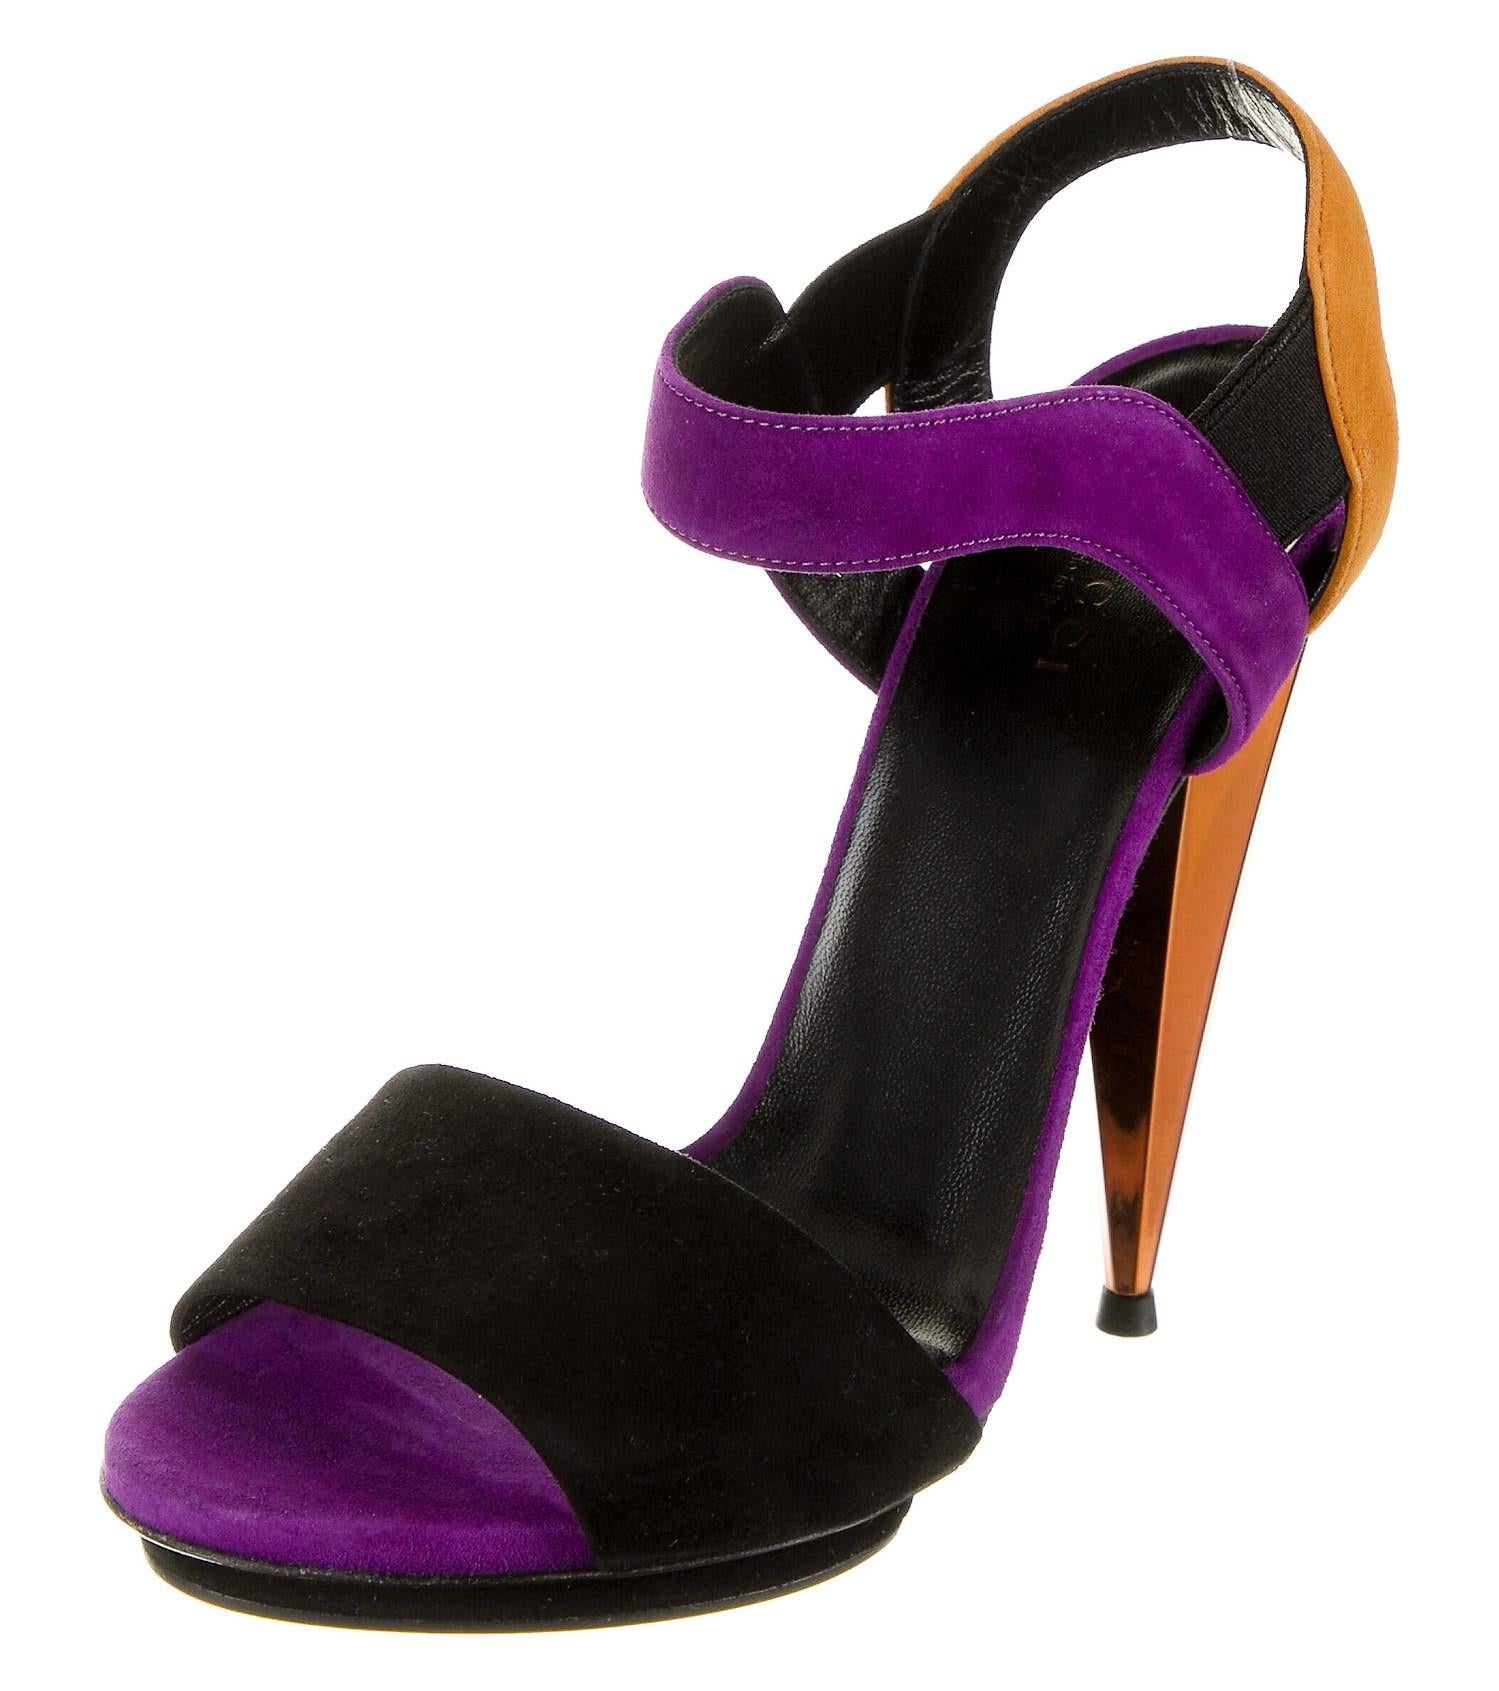 New Gucci Ad Runway 2014 Purple Orange Suede Mirrored Pump Heels Sz 38 For Sale 1